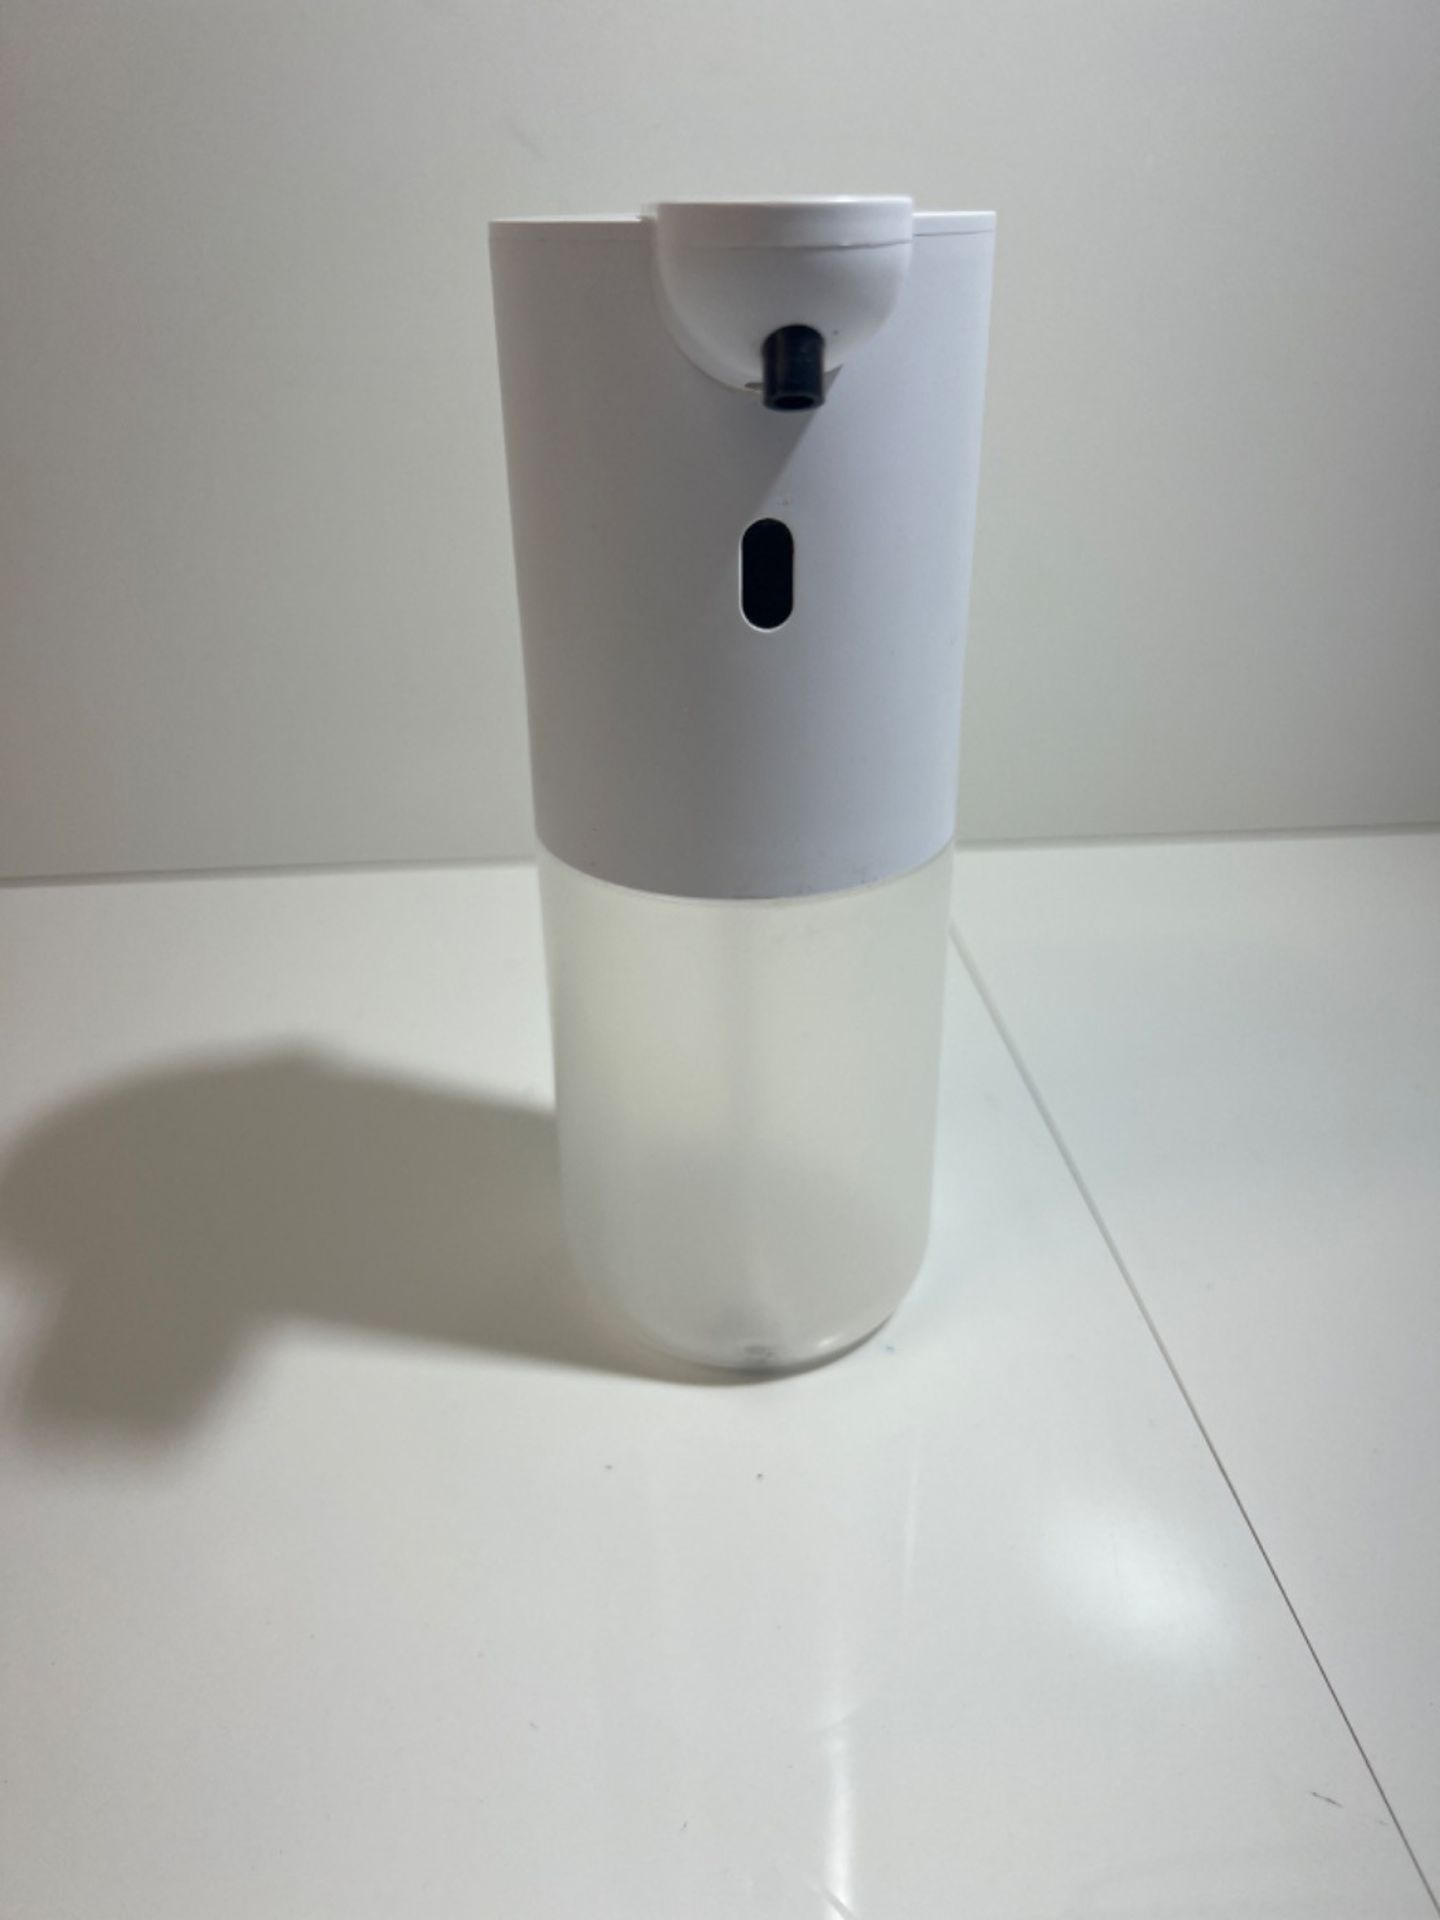 Foam Automatic Soap Dispenser Electric, Laopao No-Touch Sensor Soap Dispenser Touchless Wall Moun... - Image 2 of 3